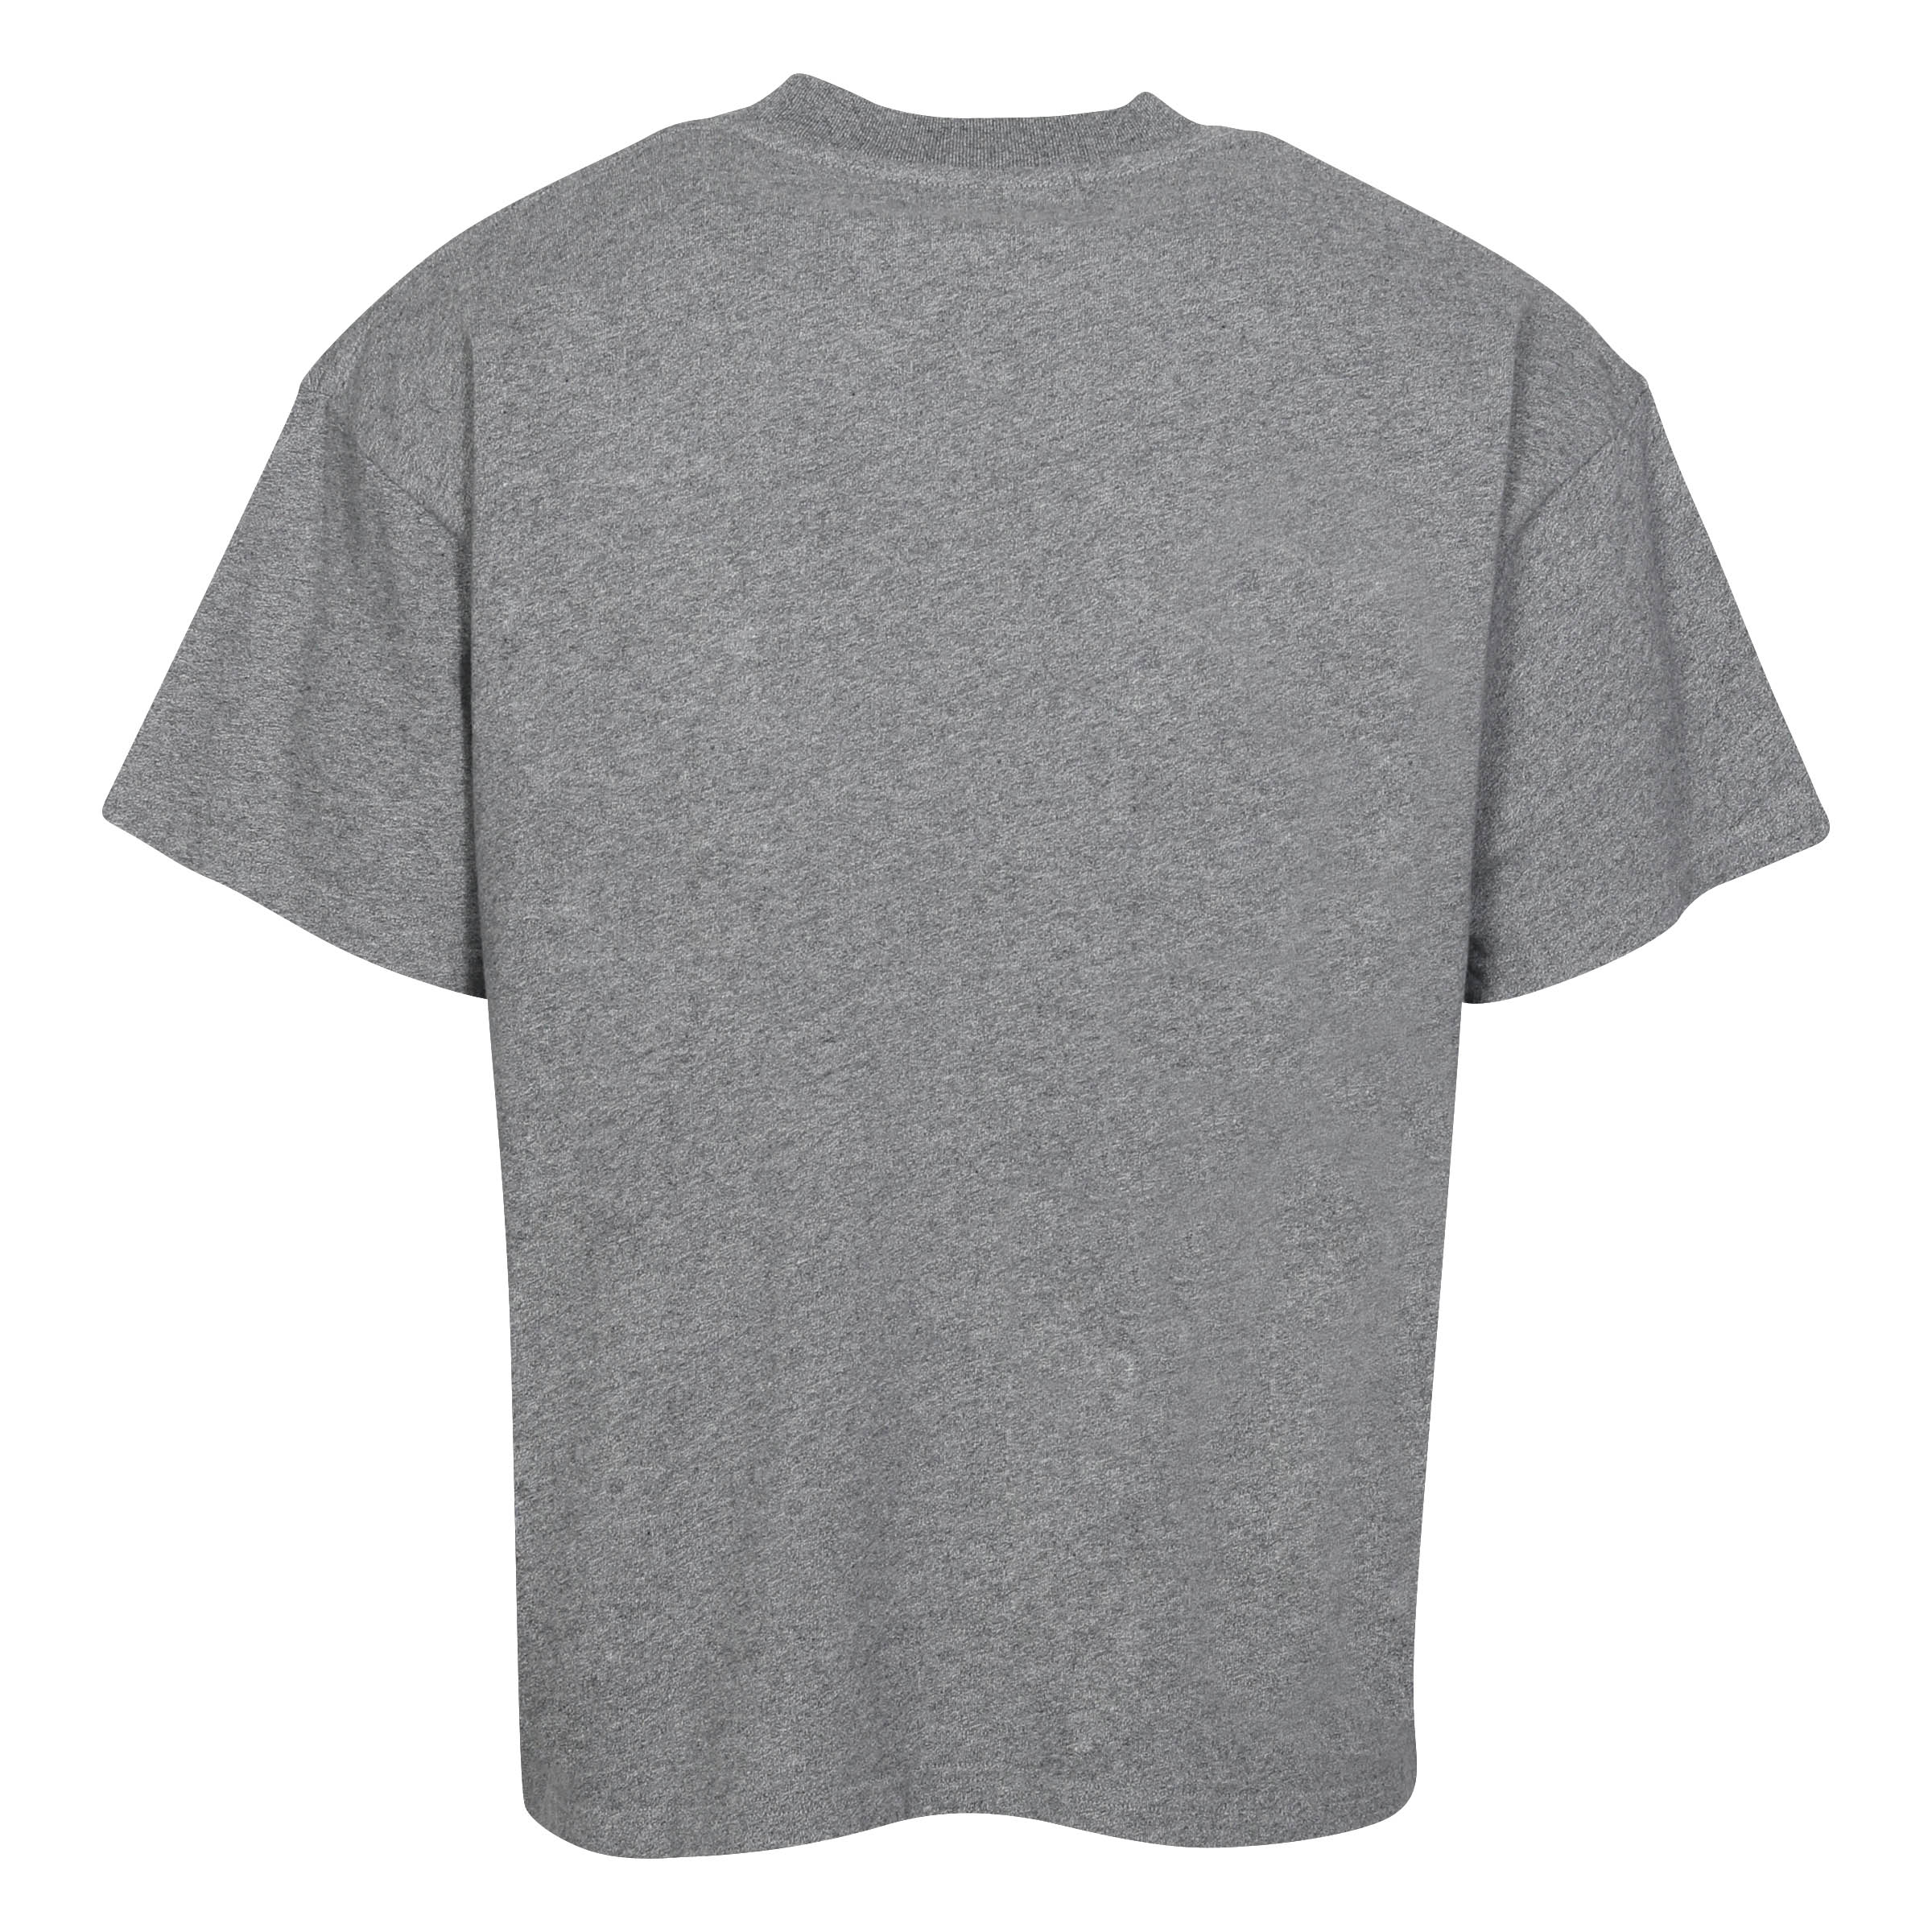 Represent Blank T-Shirt in Grey Melange